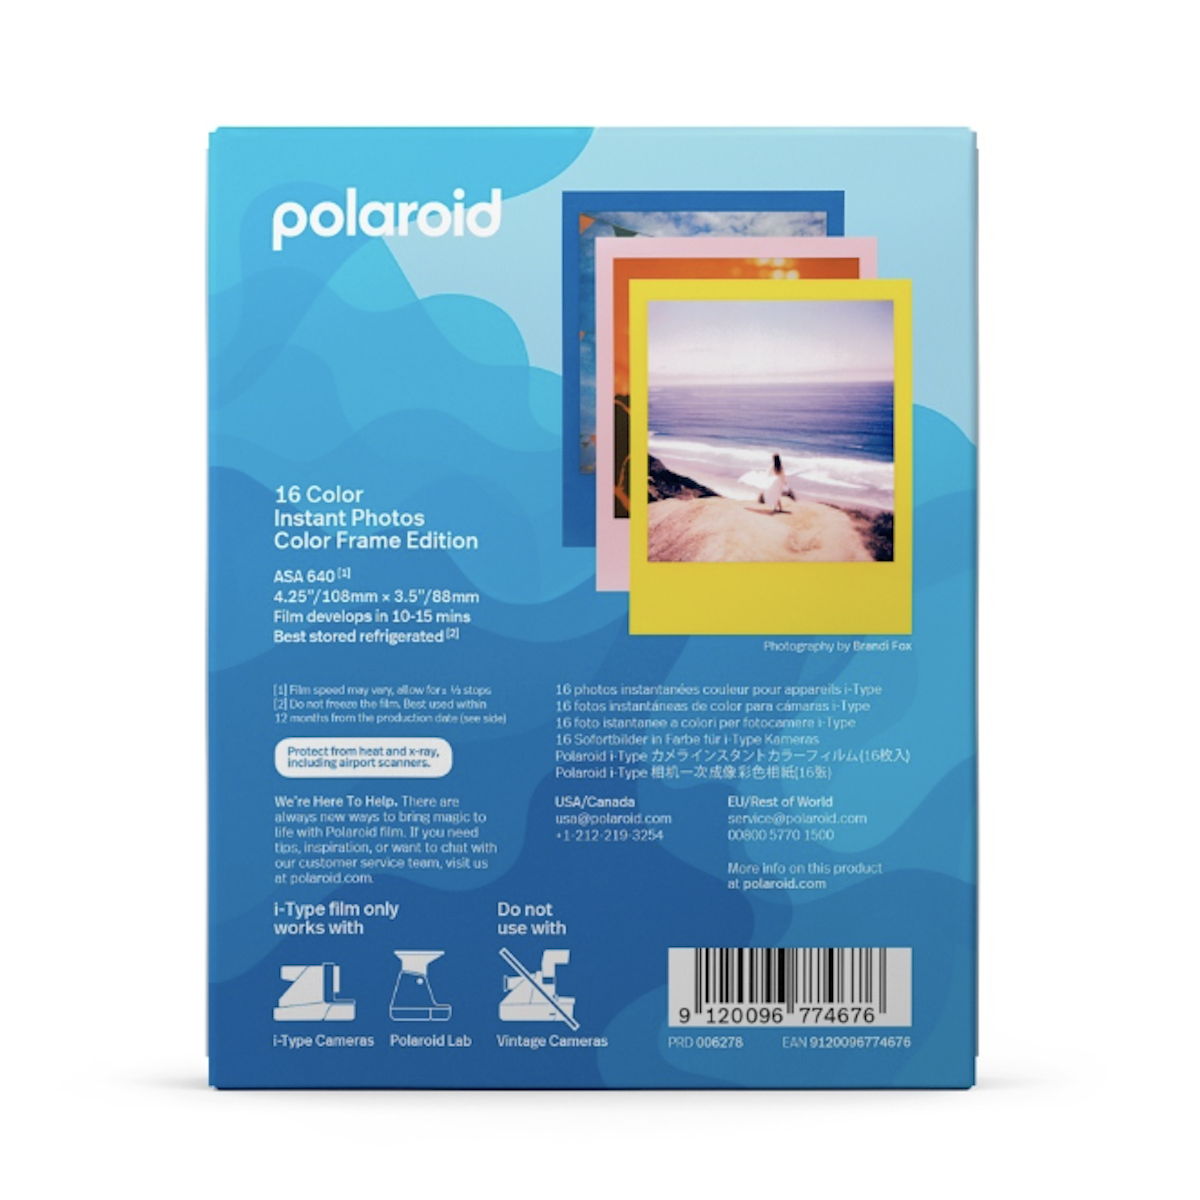 Polaroid i-Type Color Film - Summer Edition 2x8